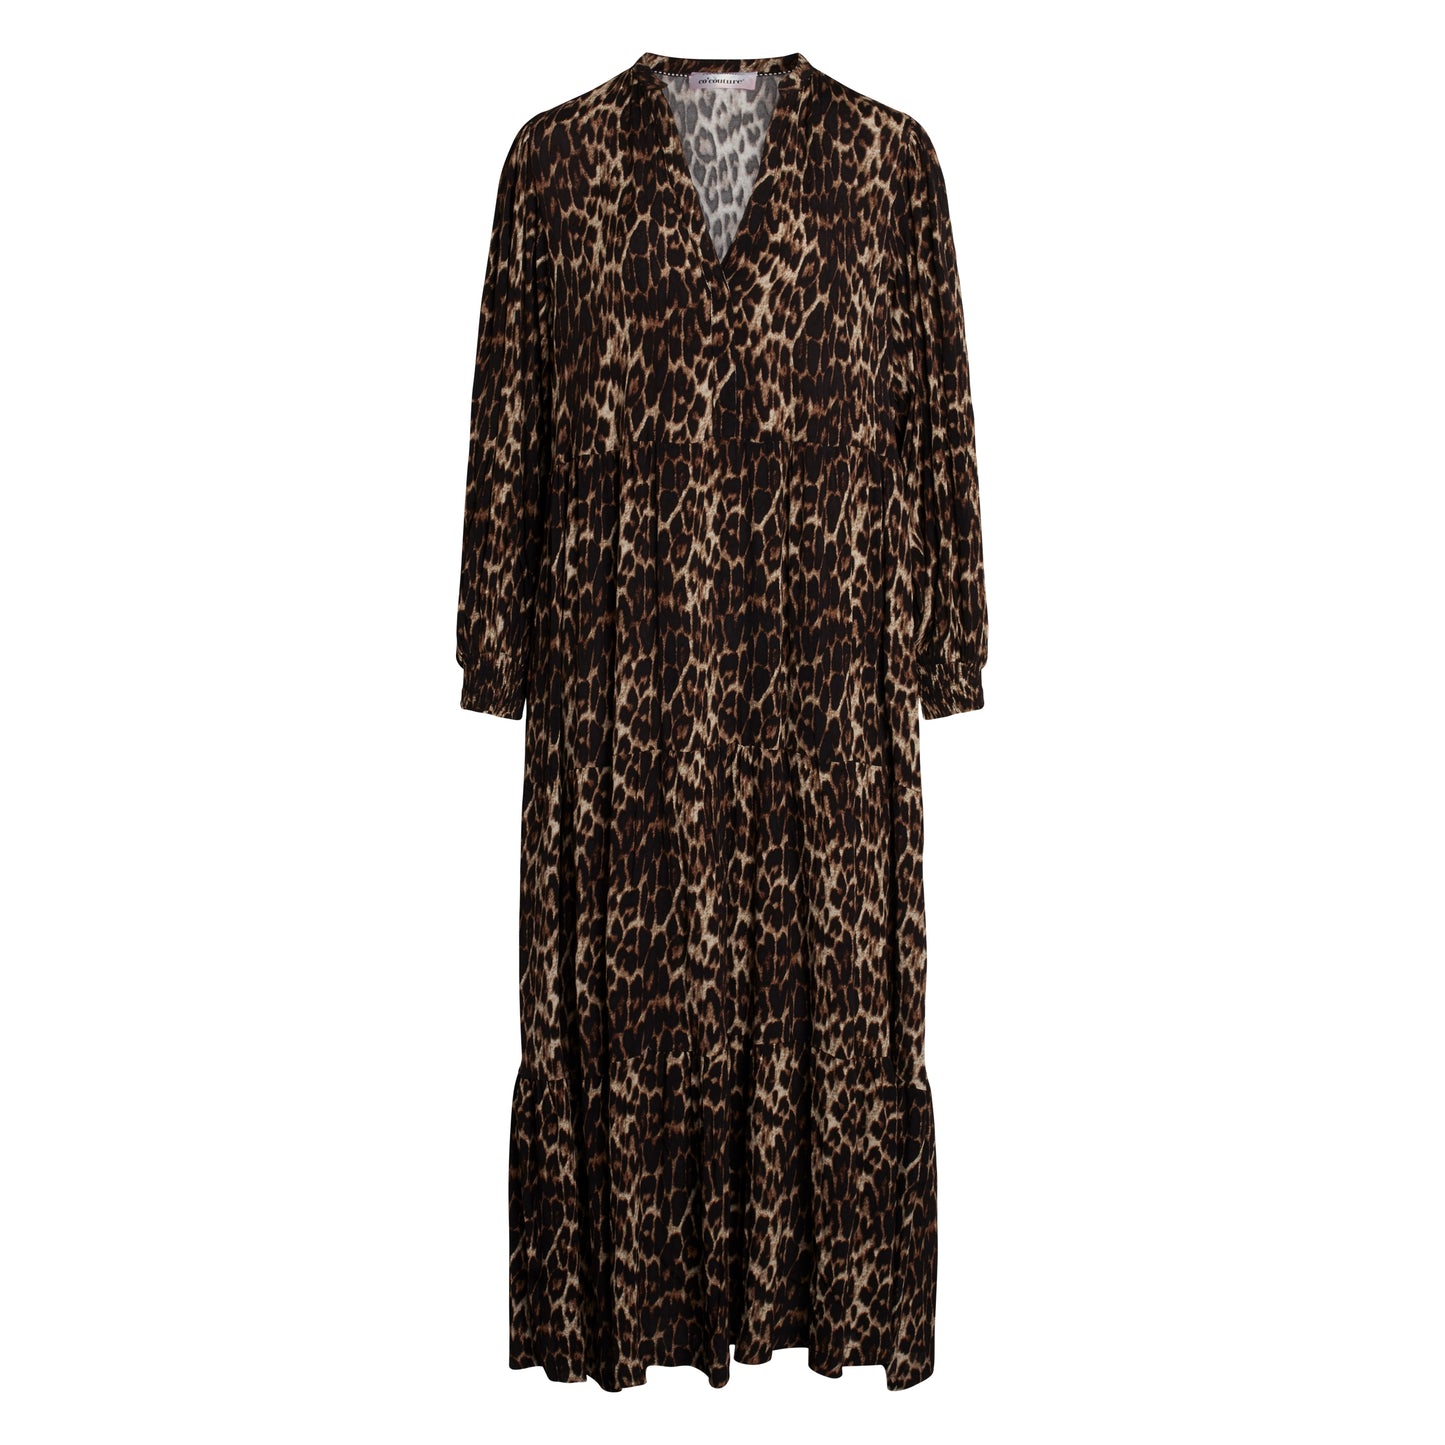 Co'couture - Nabia  Dress - Leopard